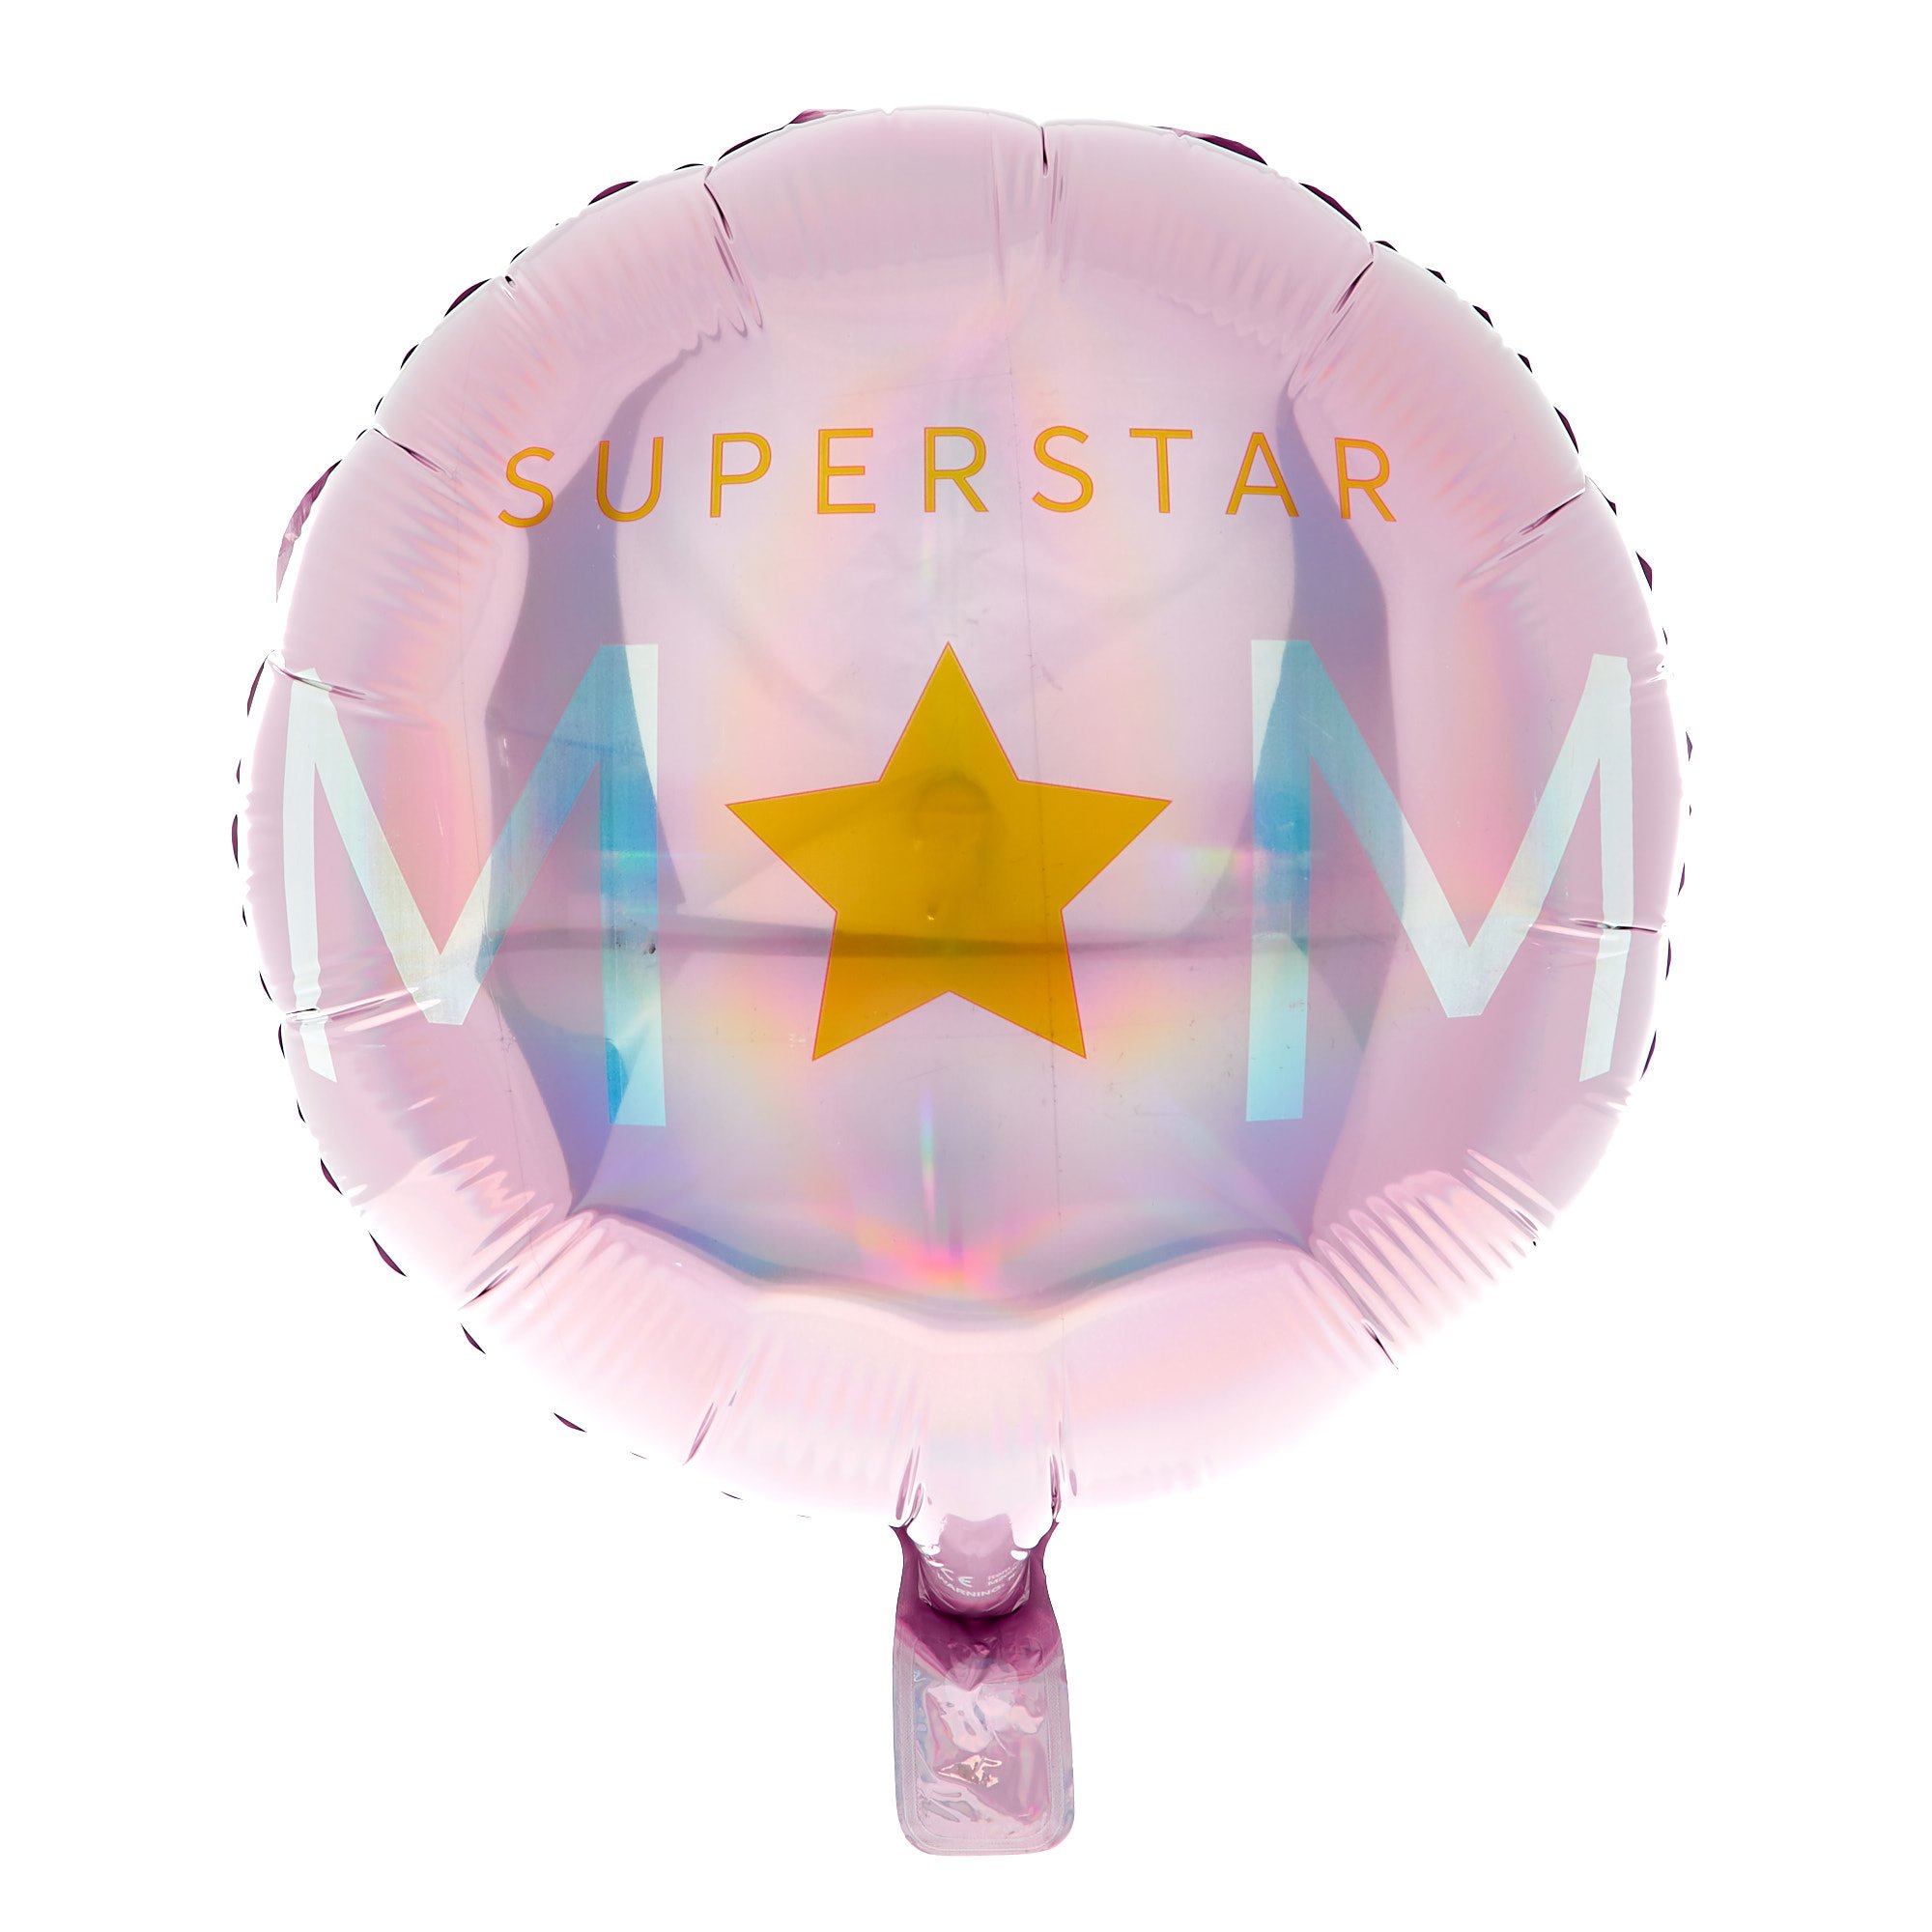 Superstar Mum Balloon & Lindt Chocolates - FREE GIFT CARD!